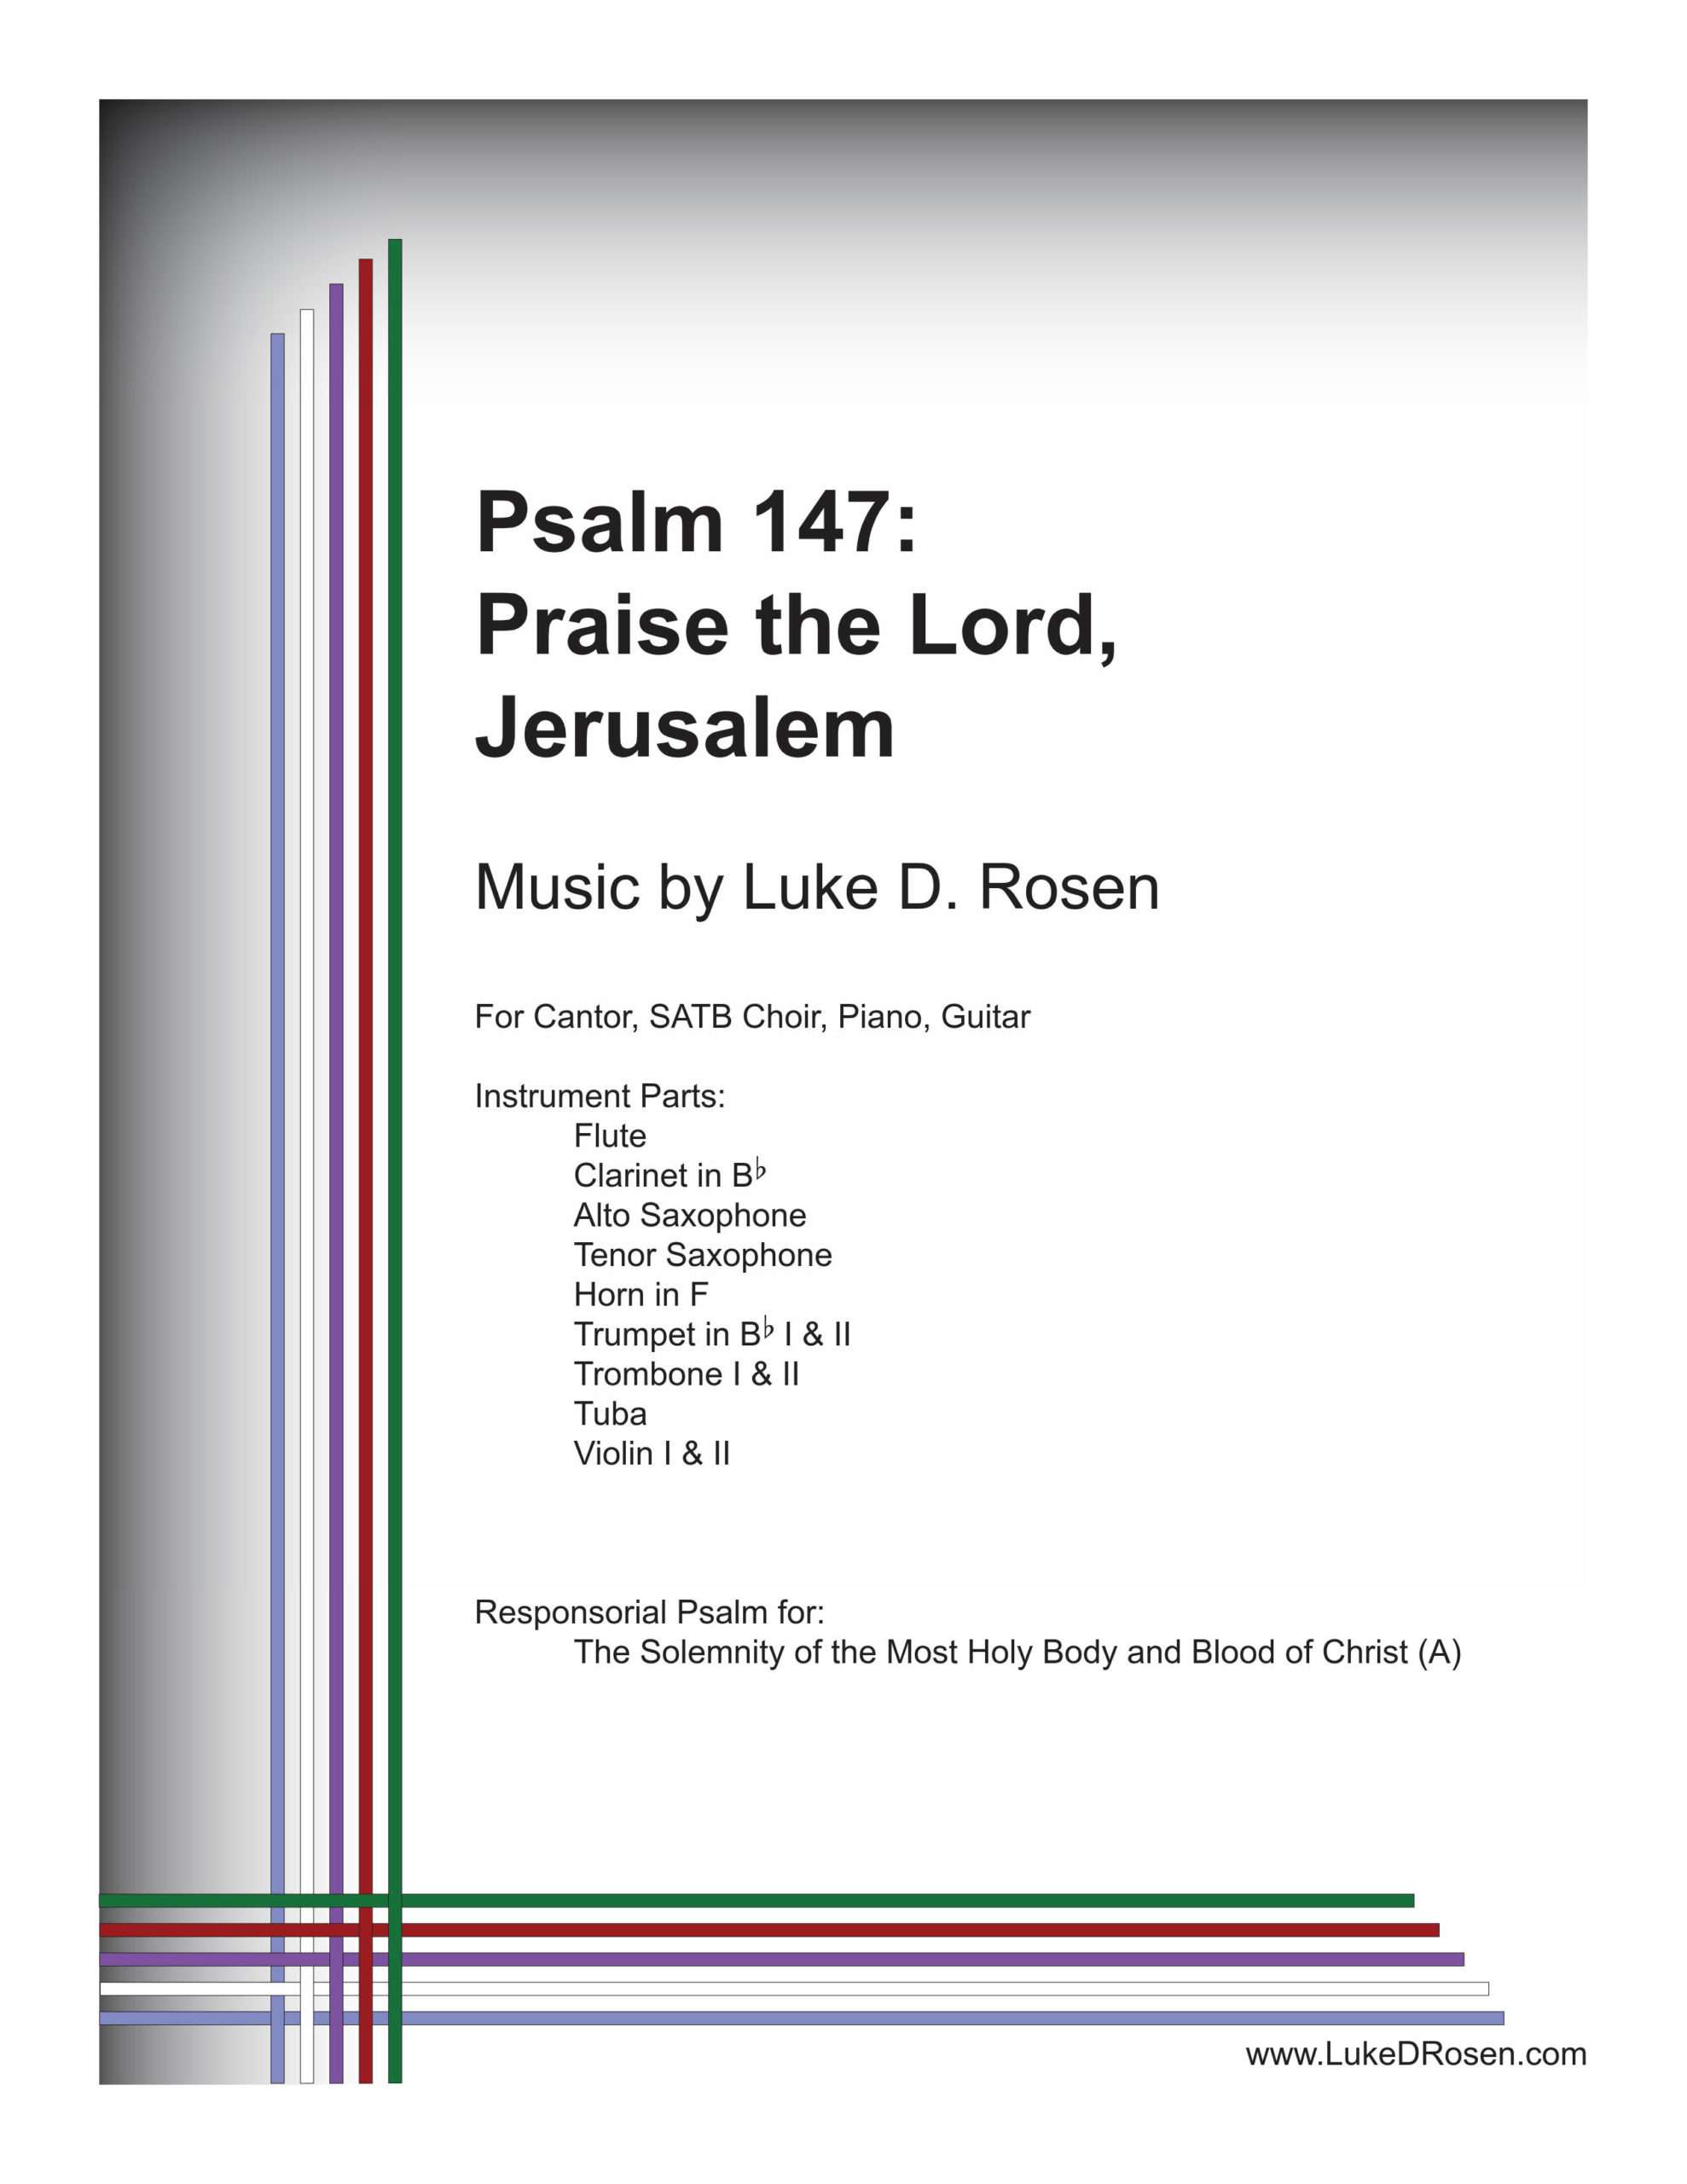 Psalm 147 – Praise the Lord, Jerusalem (Rosen)